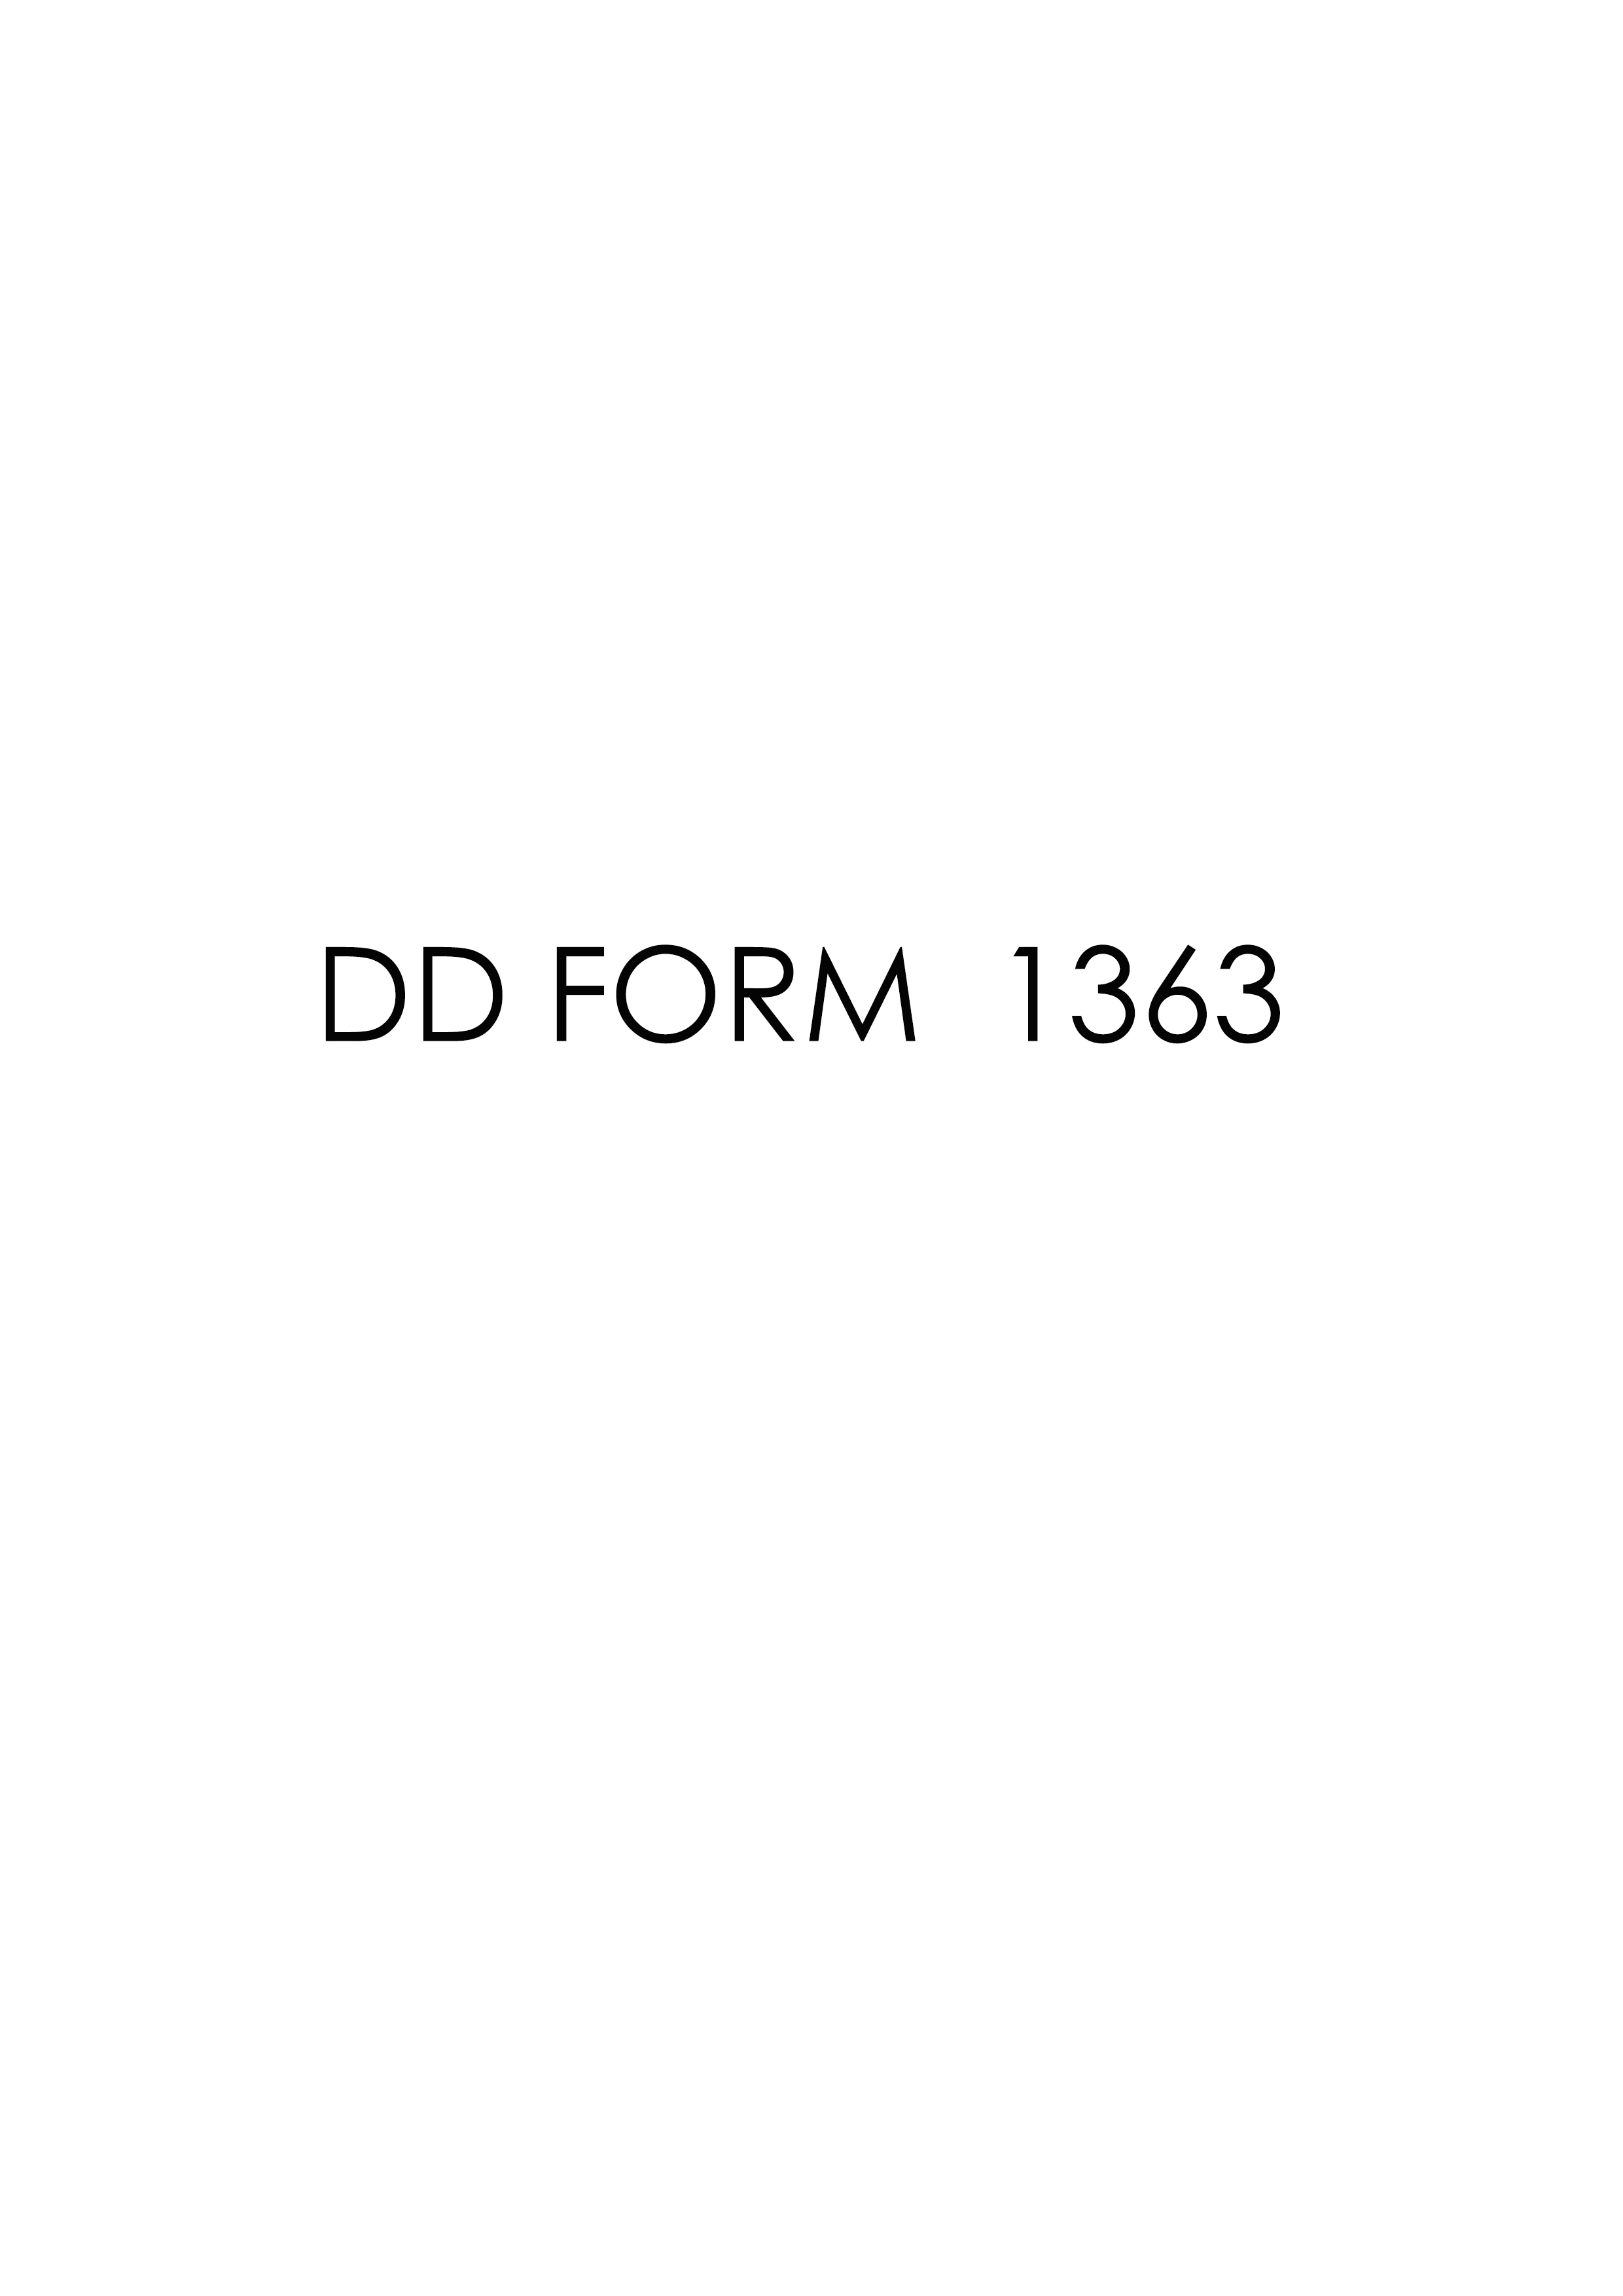 Download dd 1363 Form